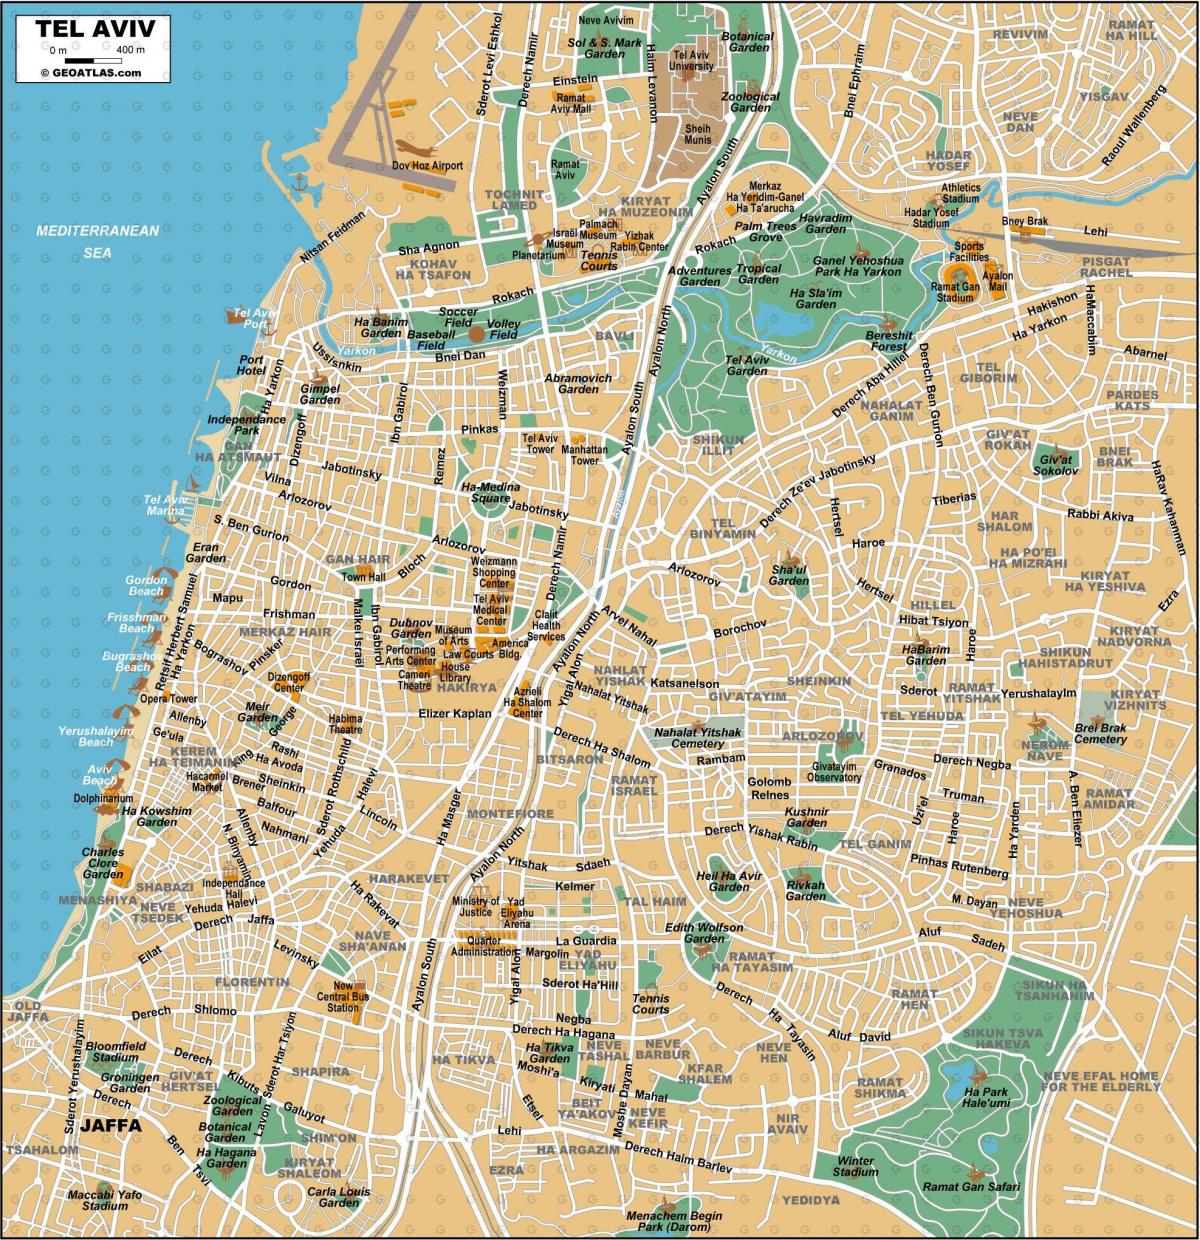 Tel Awiw mapa centrum miasta